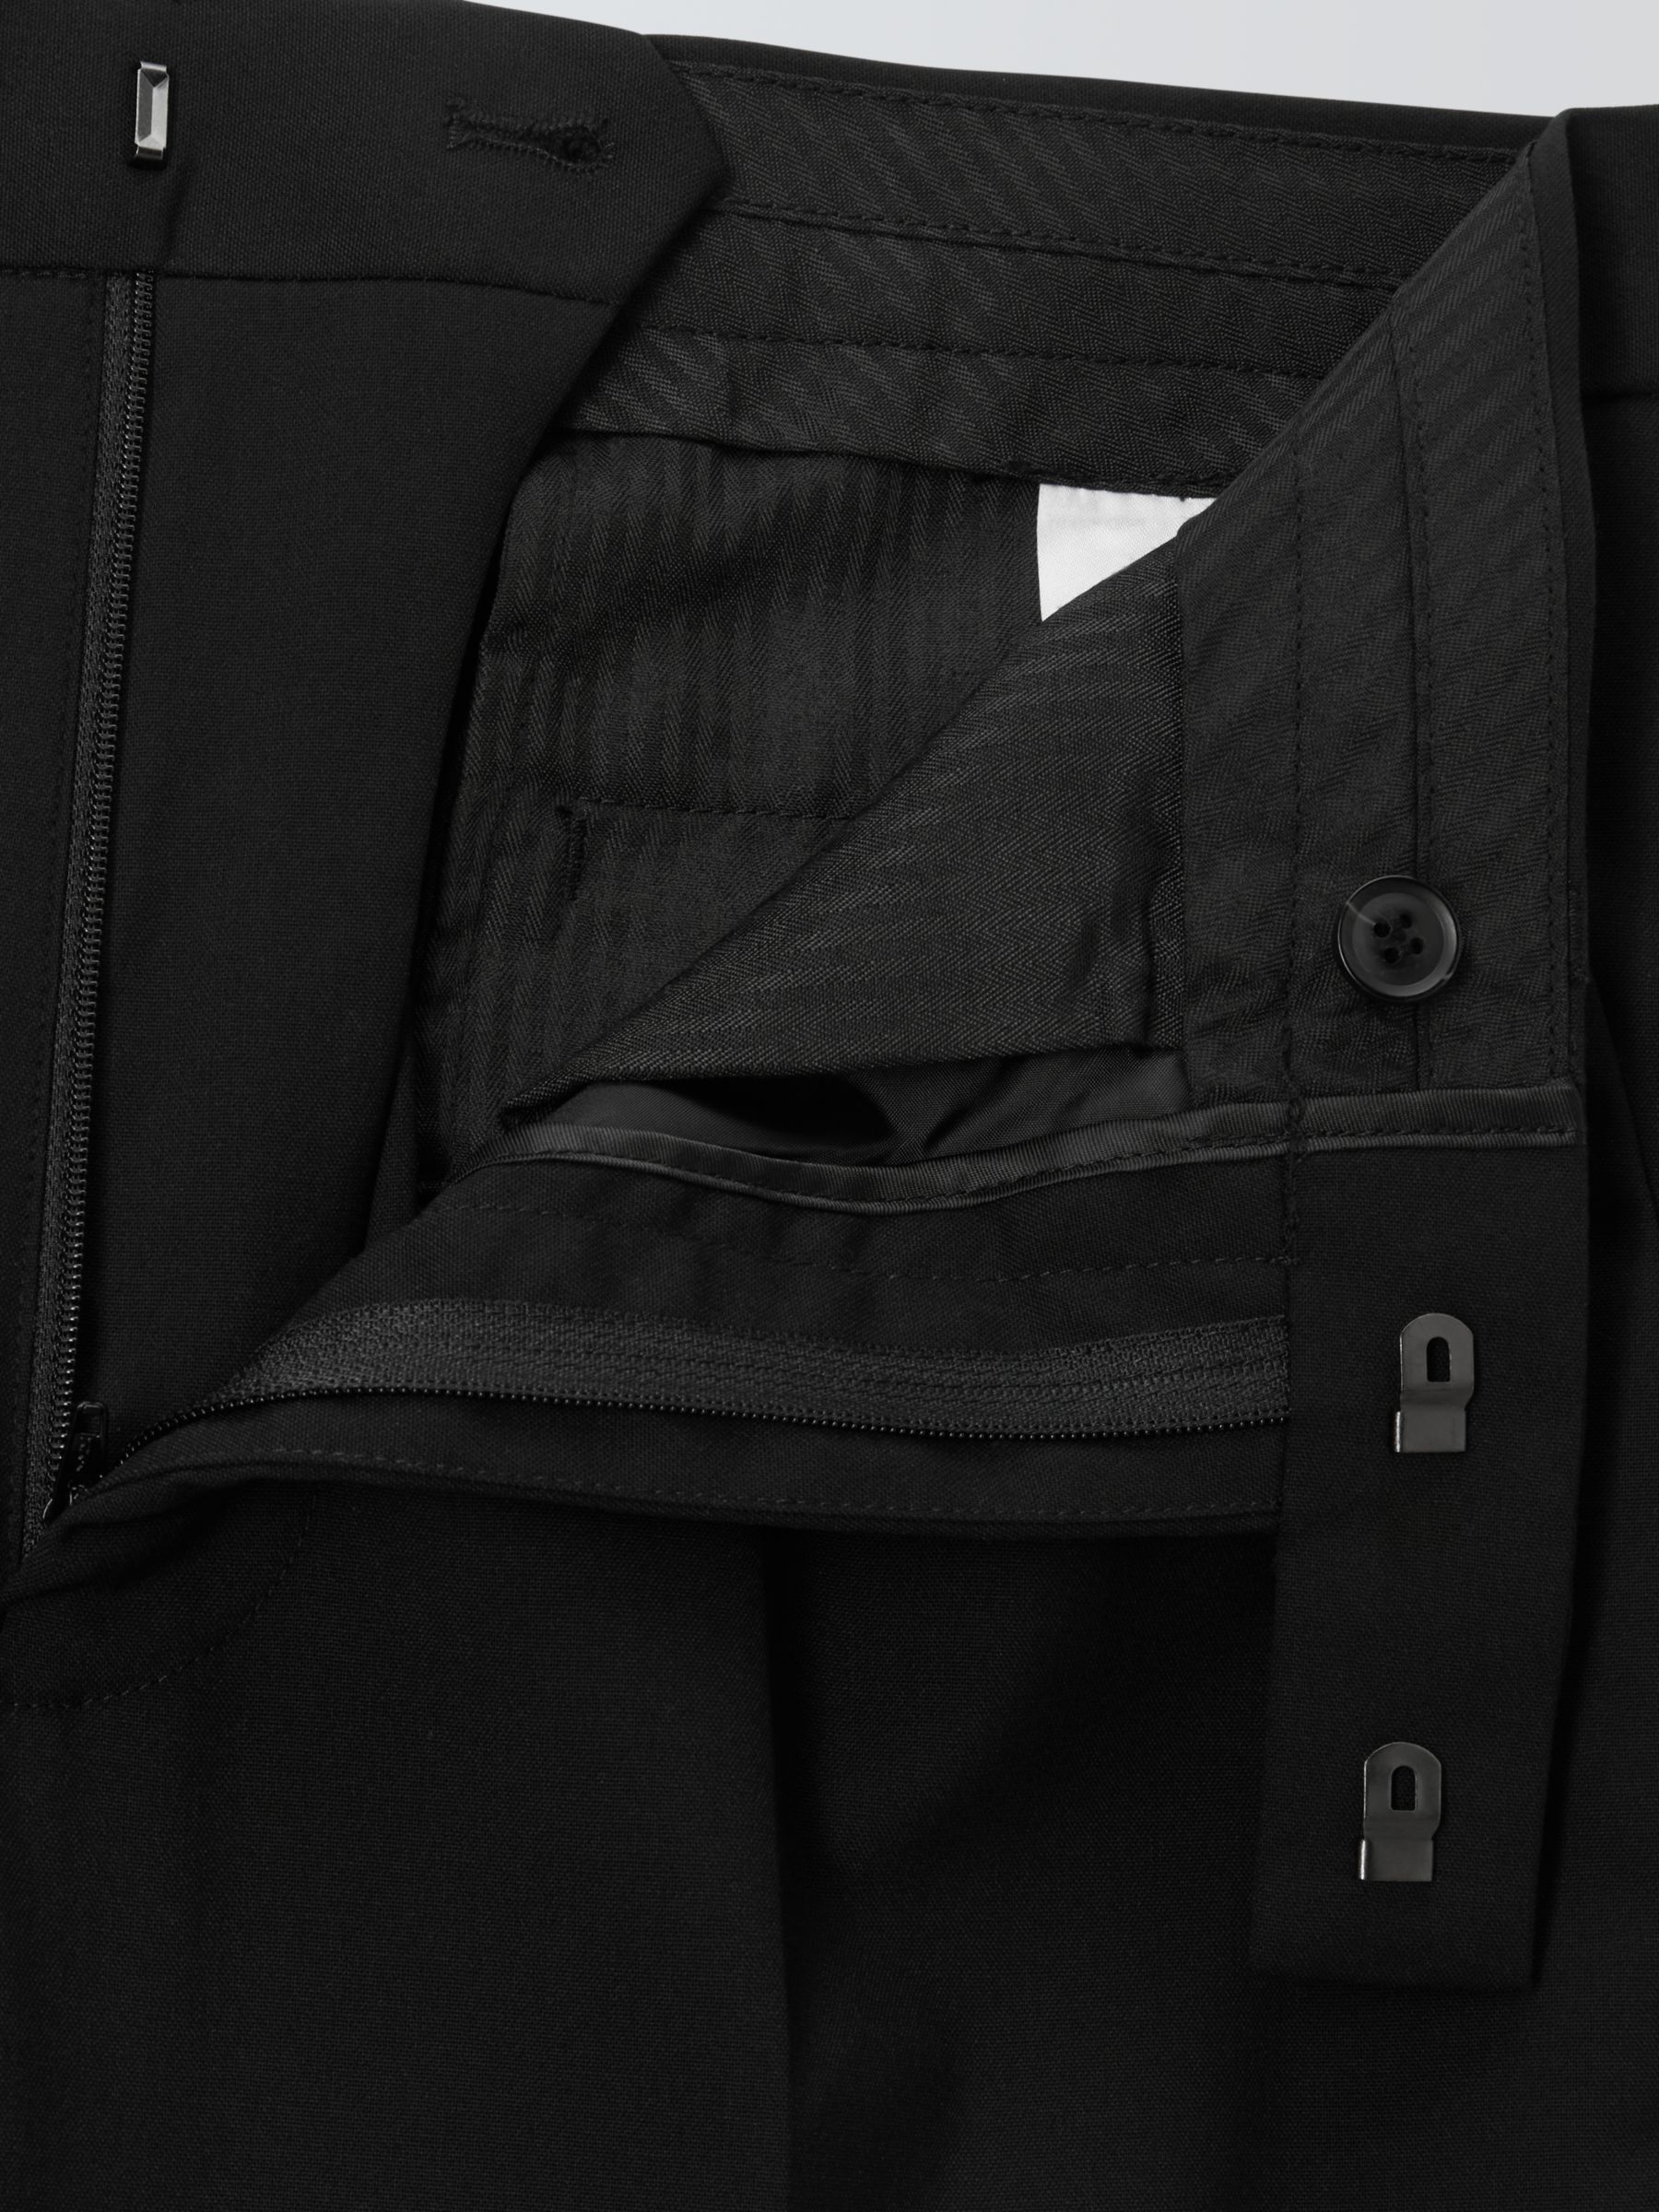 Buy John Lewis Slim Fit Starter Suit Trousers Online at johnlewis.com